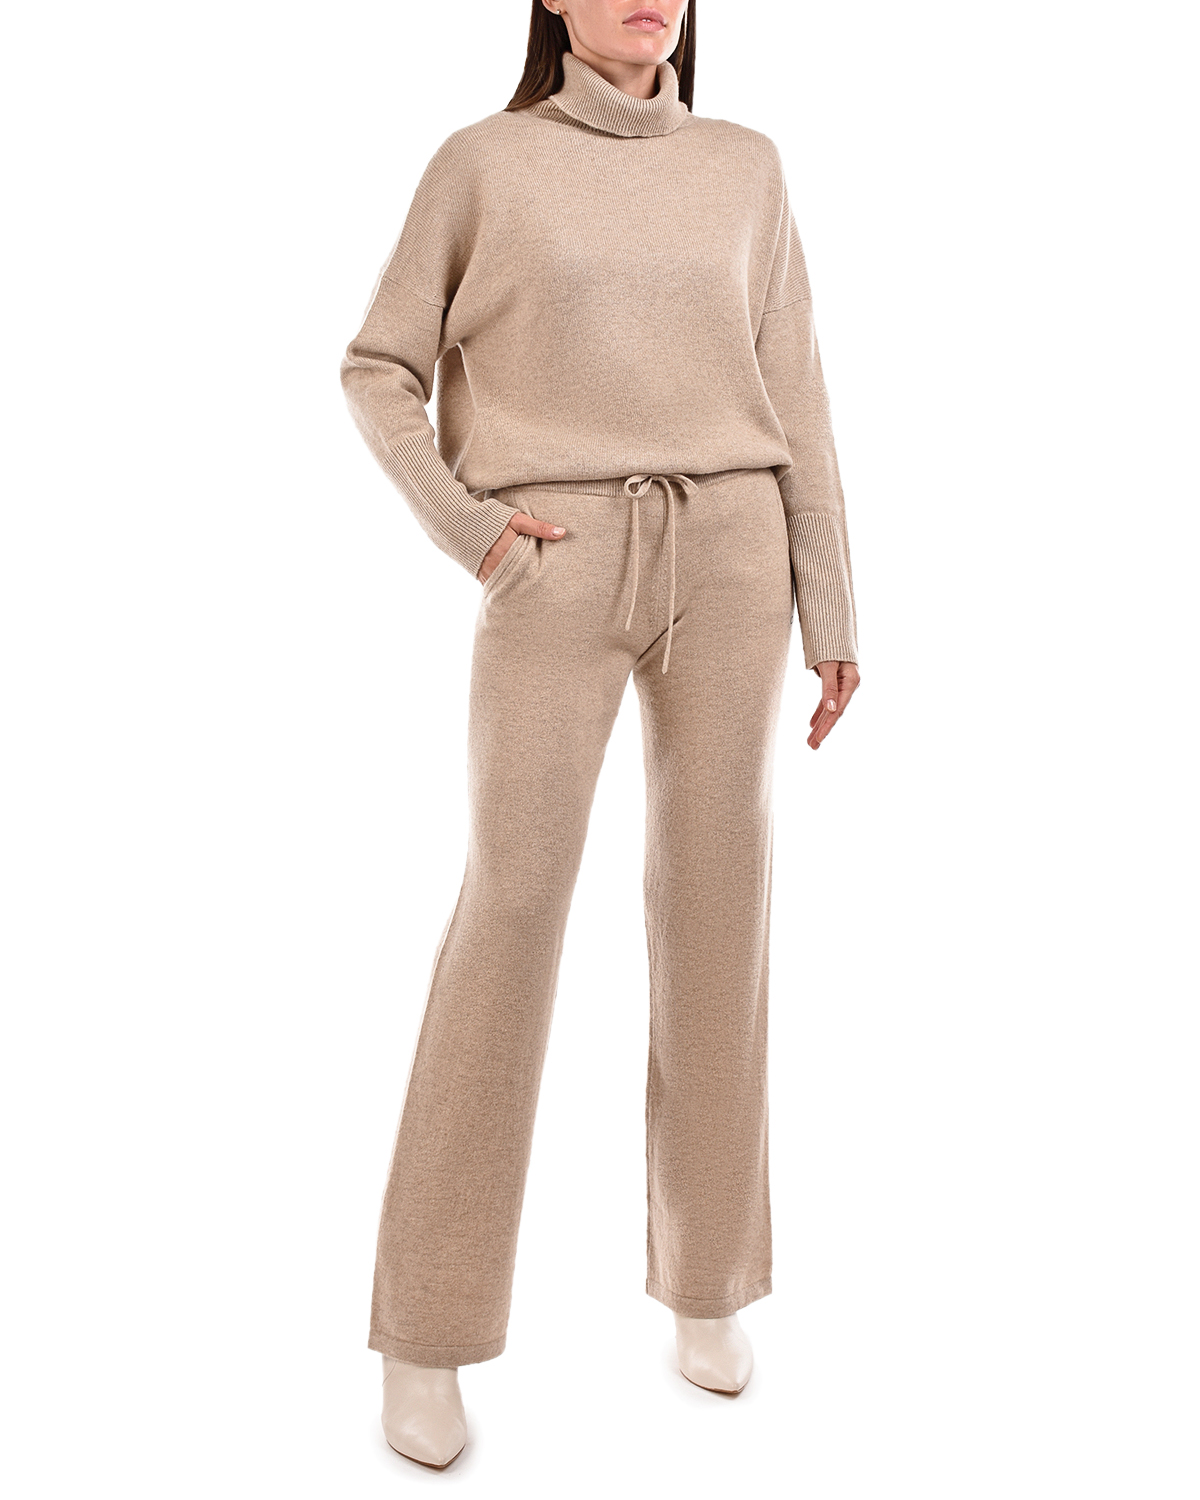 Бежевые брюки с поясом на кулиске Chinti&Parker, размер 38, цвет бежевый - фото 3